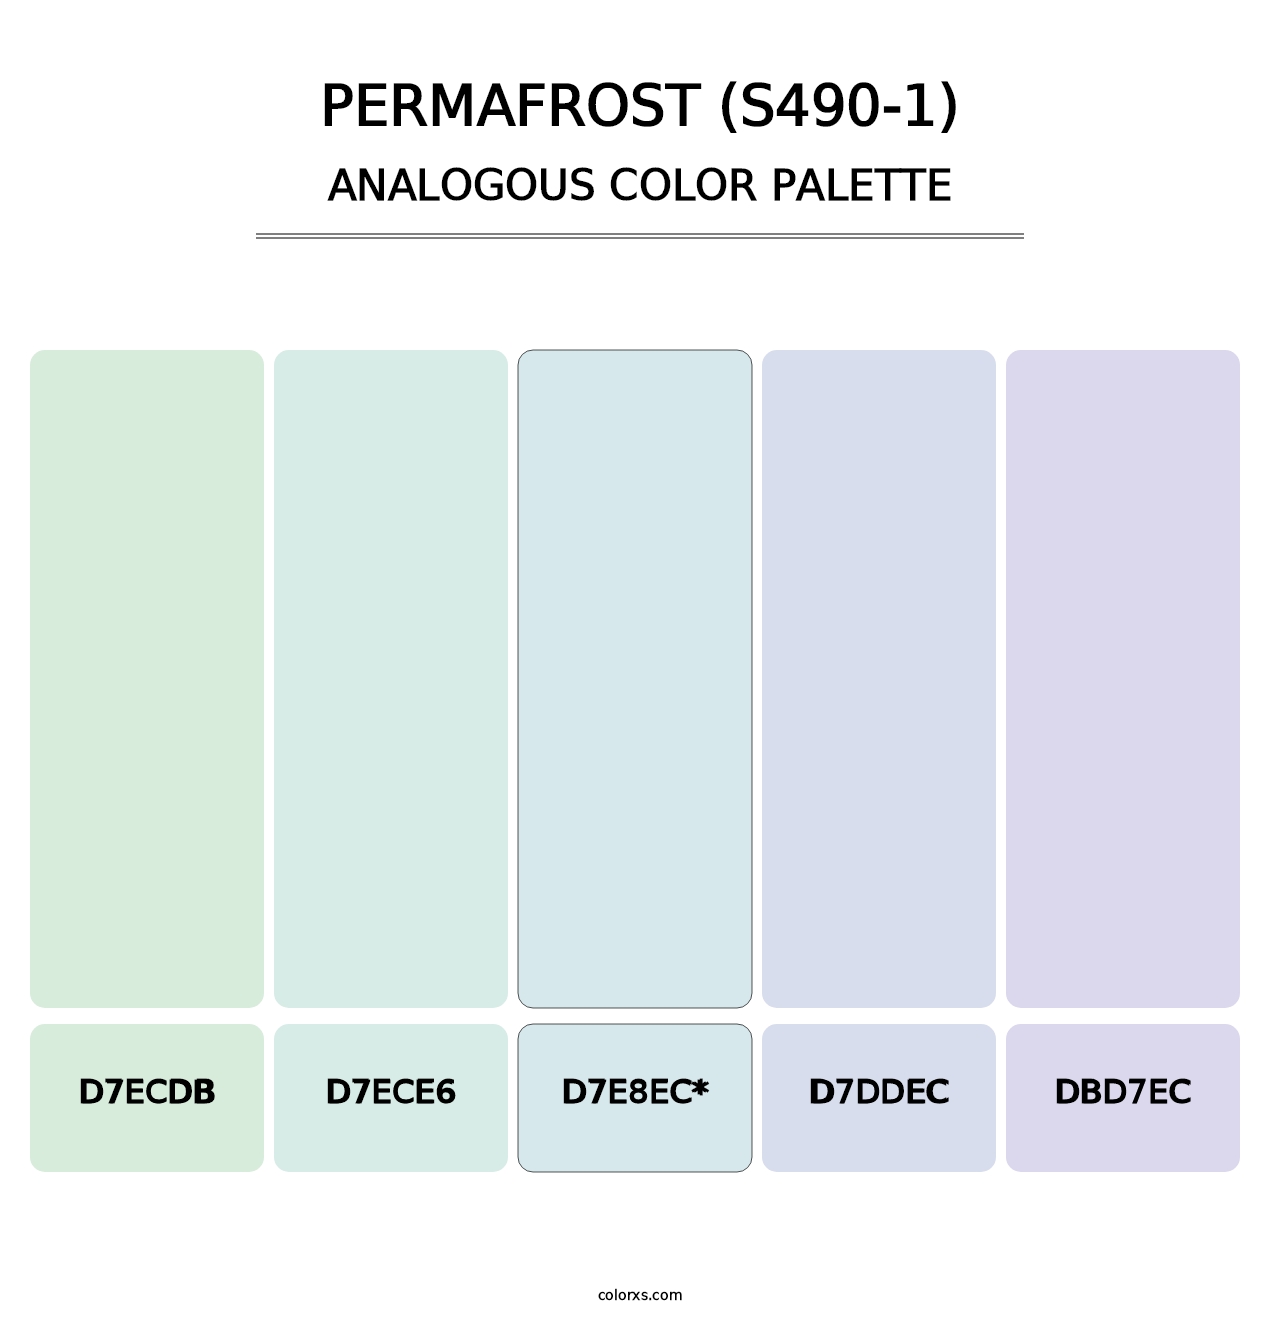 Permafrost (S490-1) - Analogous Color Palette